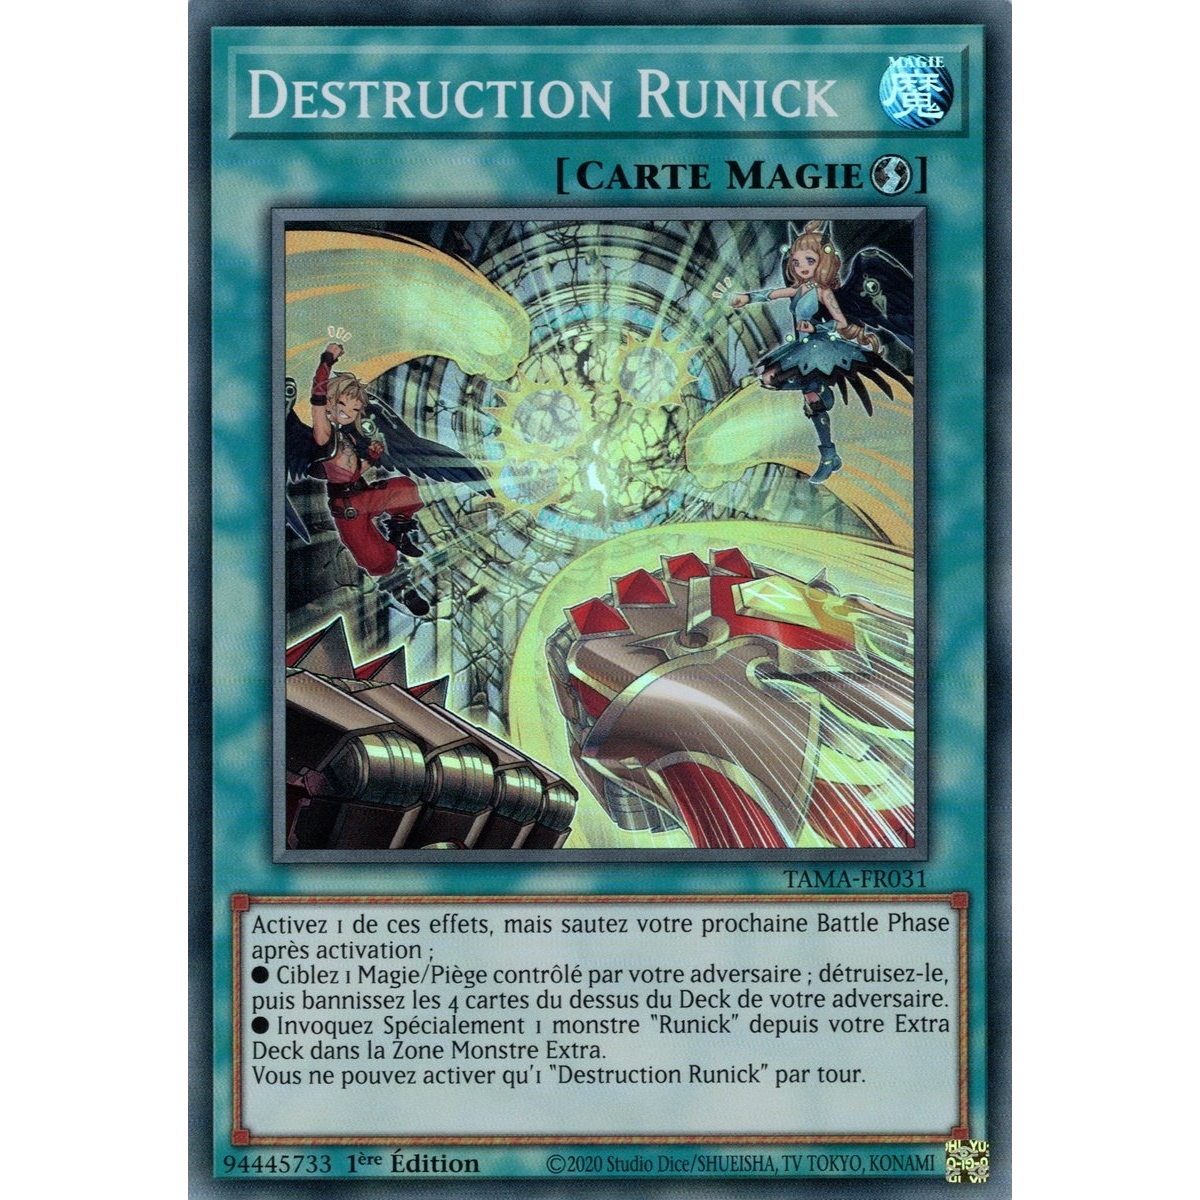 Destruction Runick TAMA-FR031